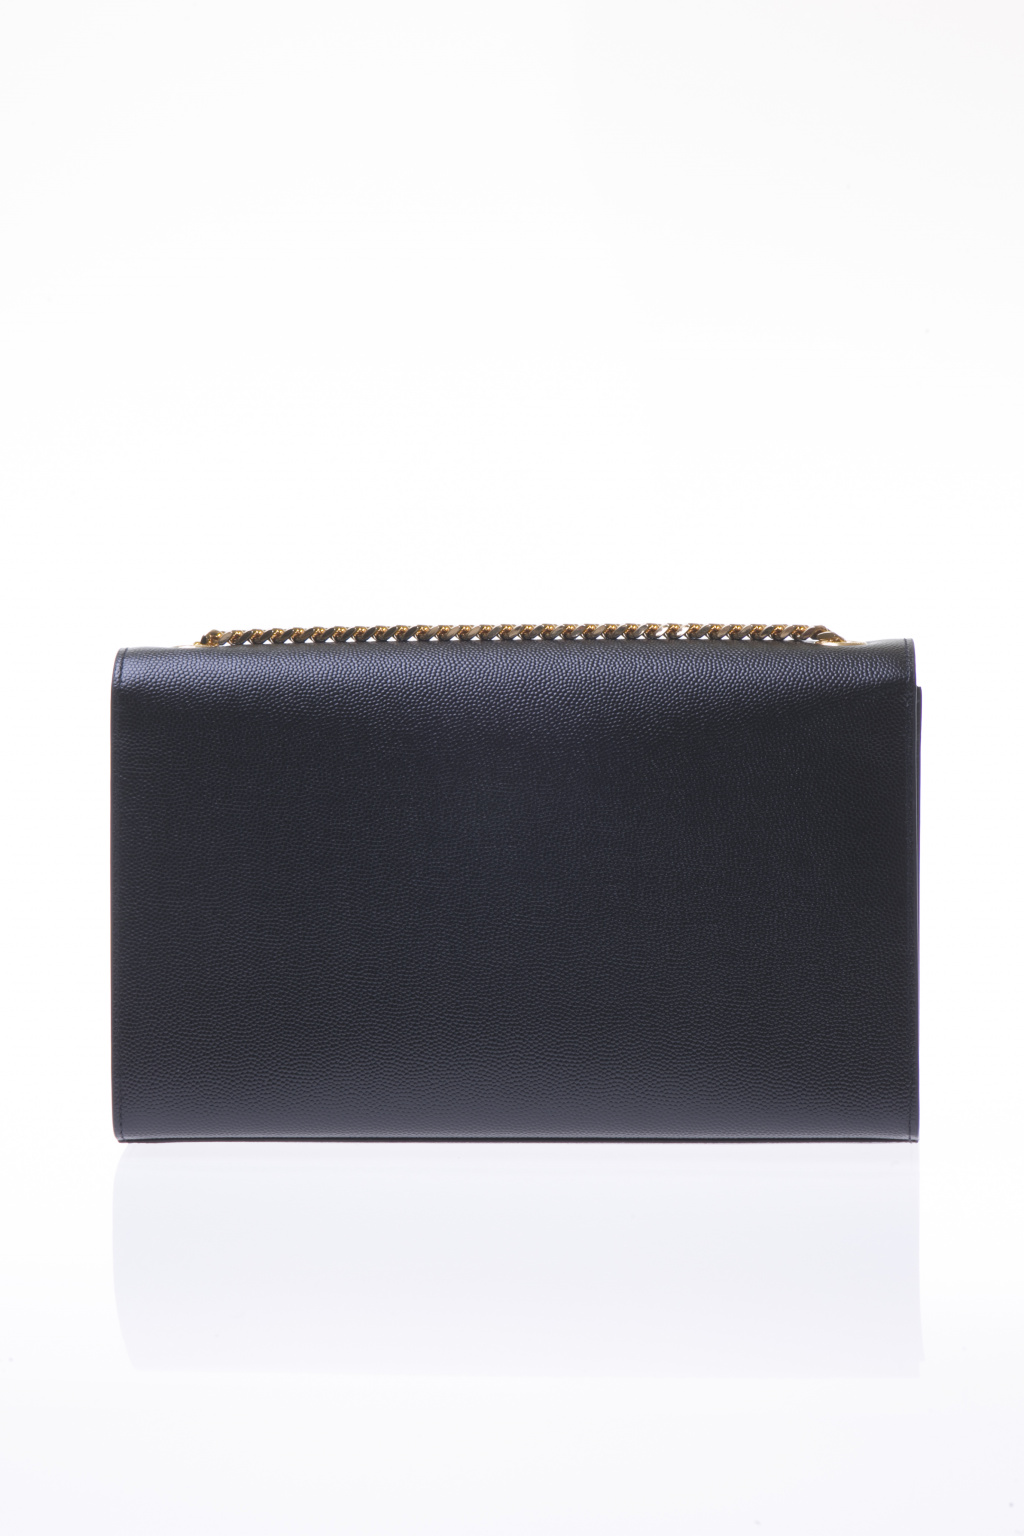 Saint Laurent - Small Kate Tassel Shoulder Bag - Women - Calf Leather - One Size - Black